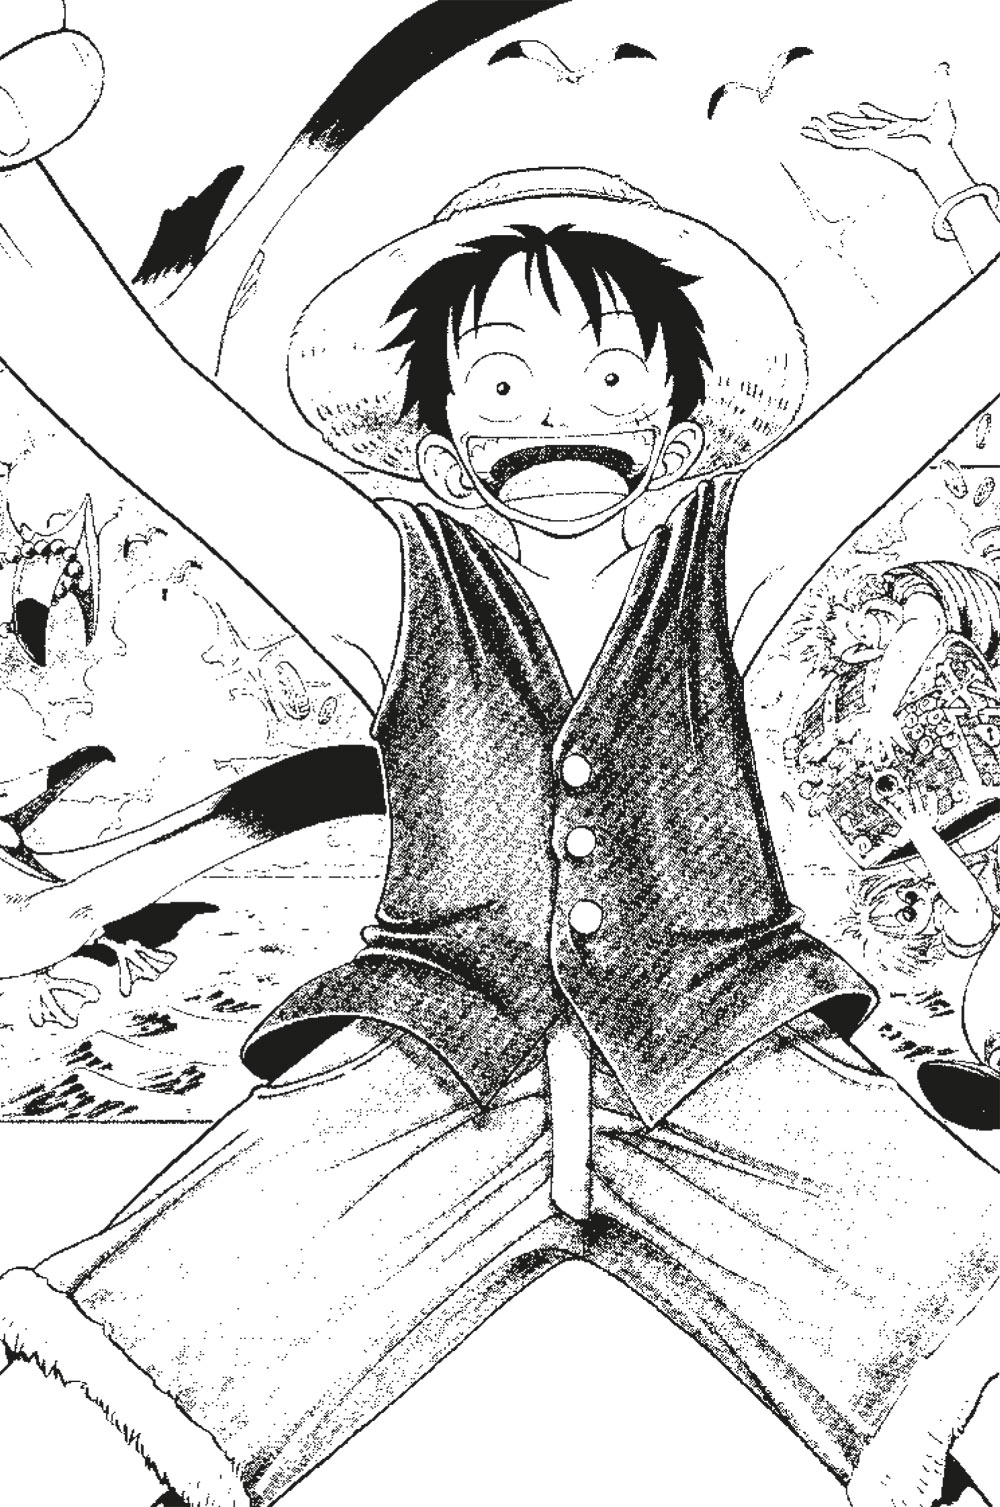 One Piece Vol. 1: Romance Dawn – A Alvorada da Aventura